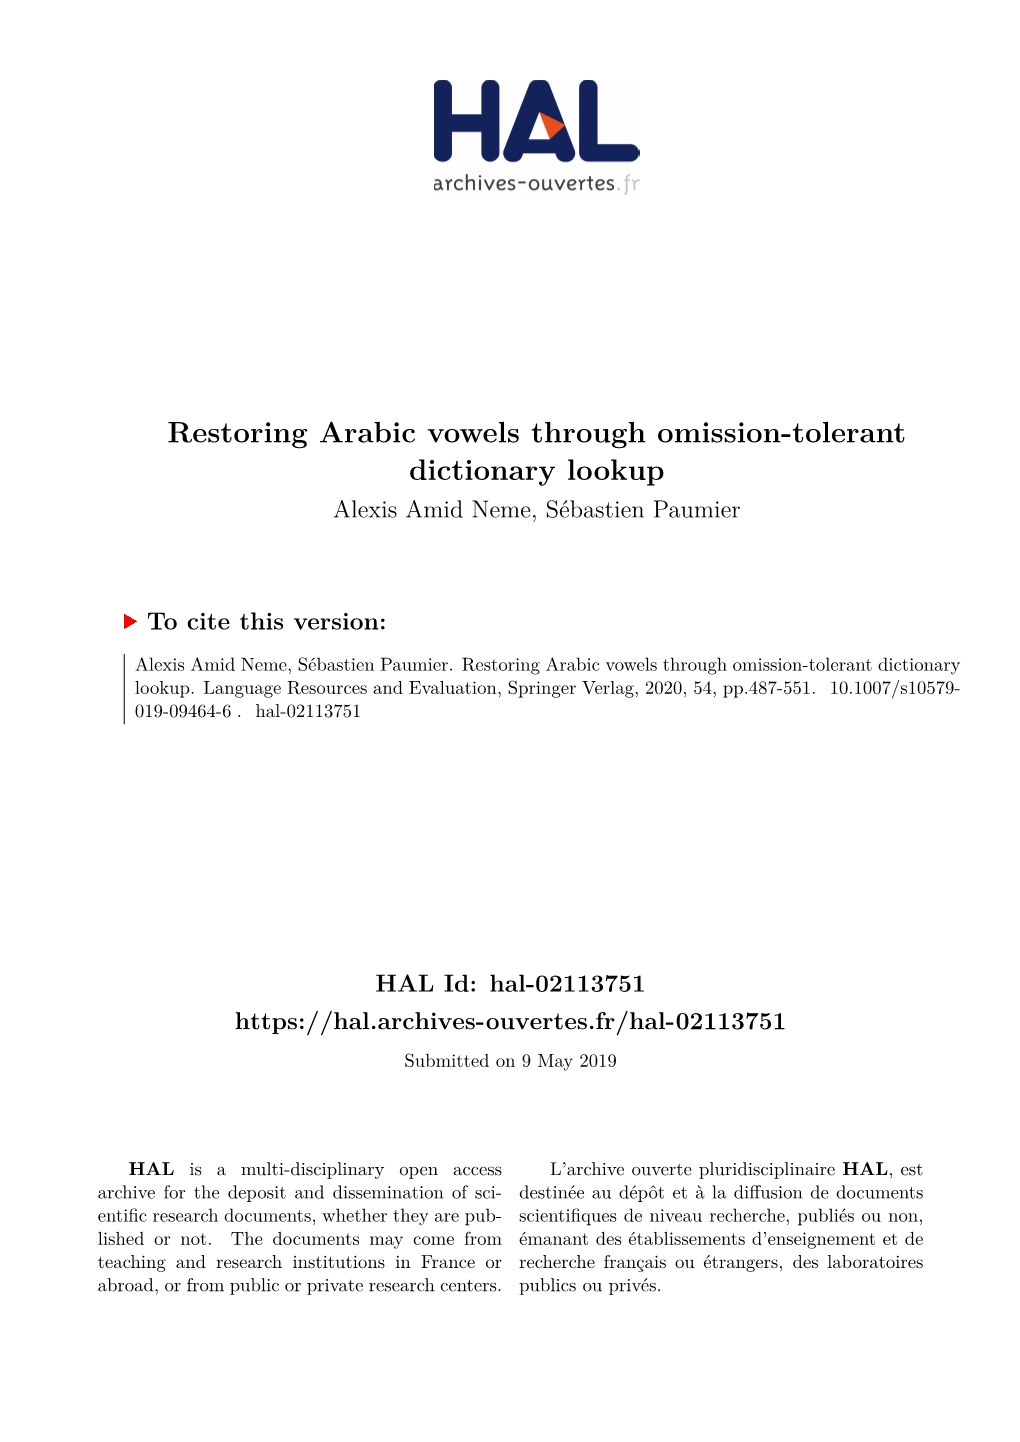 Restoring Arabic Vowels Through Omission-Tolerant Dictionary Lookup Alexis Amid Neme, Sébastien Paumier